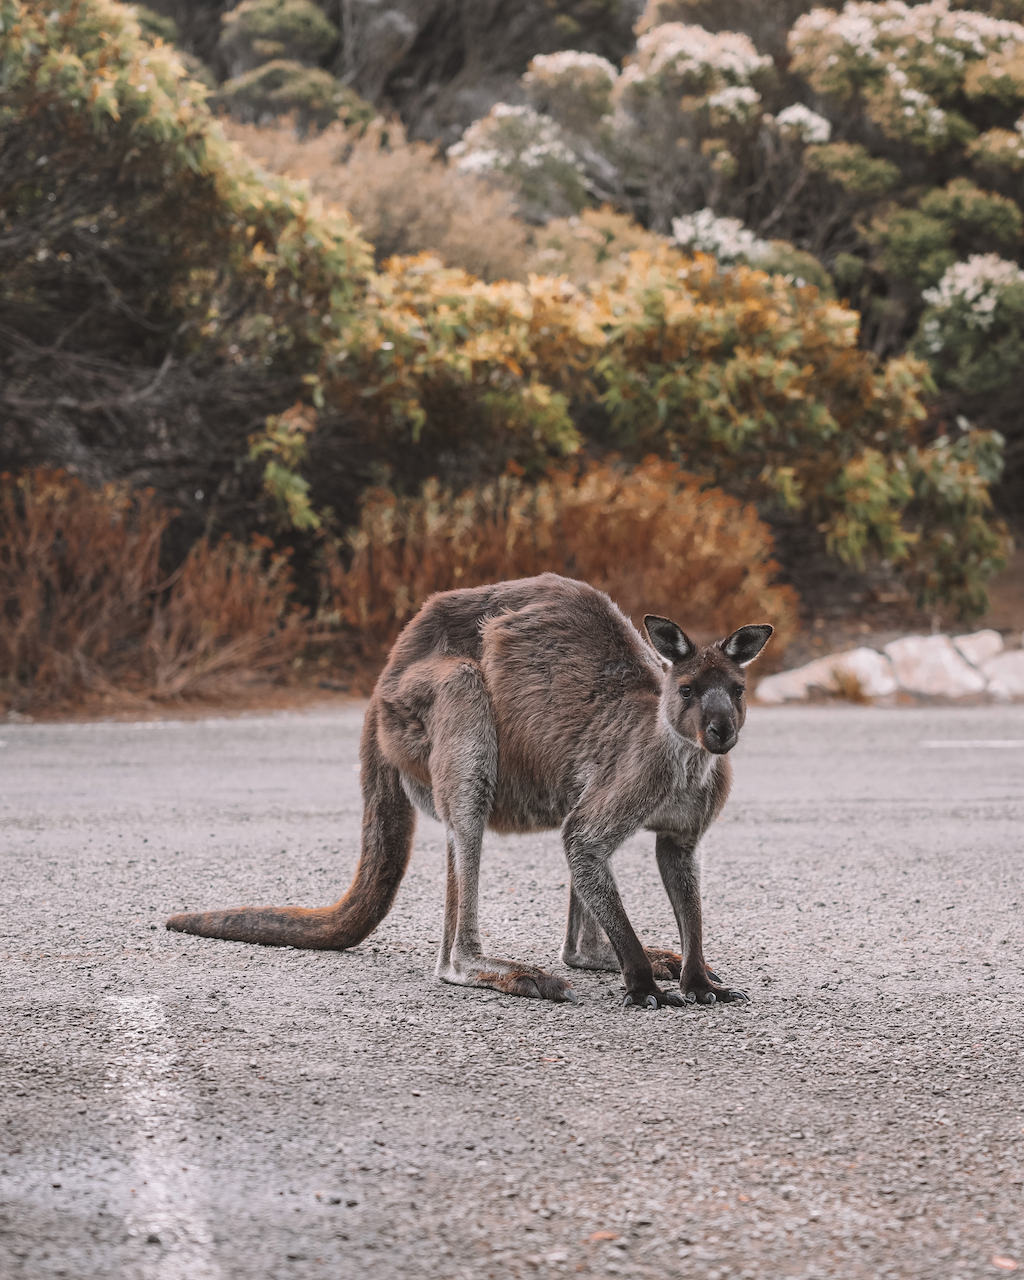 A kangaroo in the car park - Kangaroo Island - South Australia (SA) - Australia